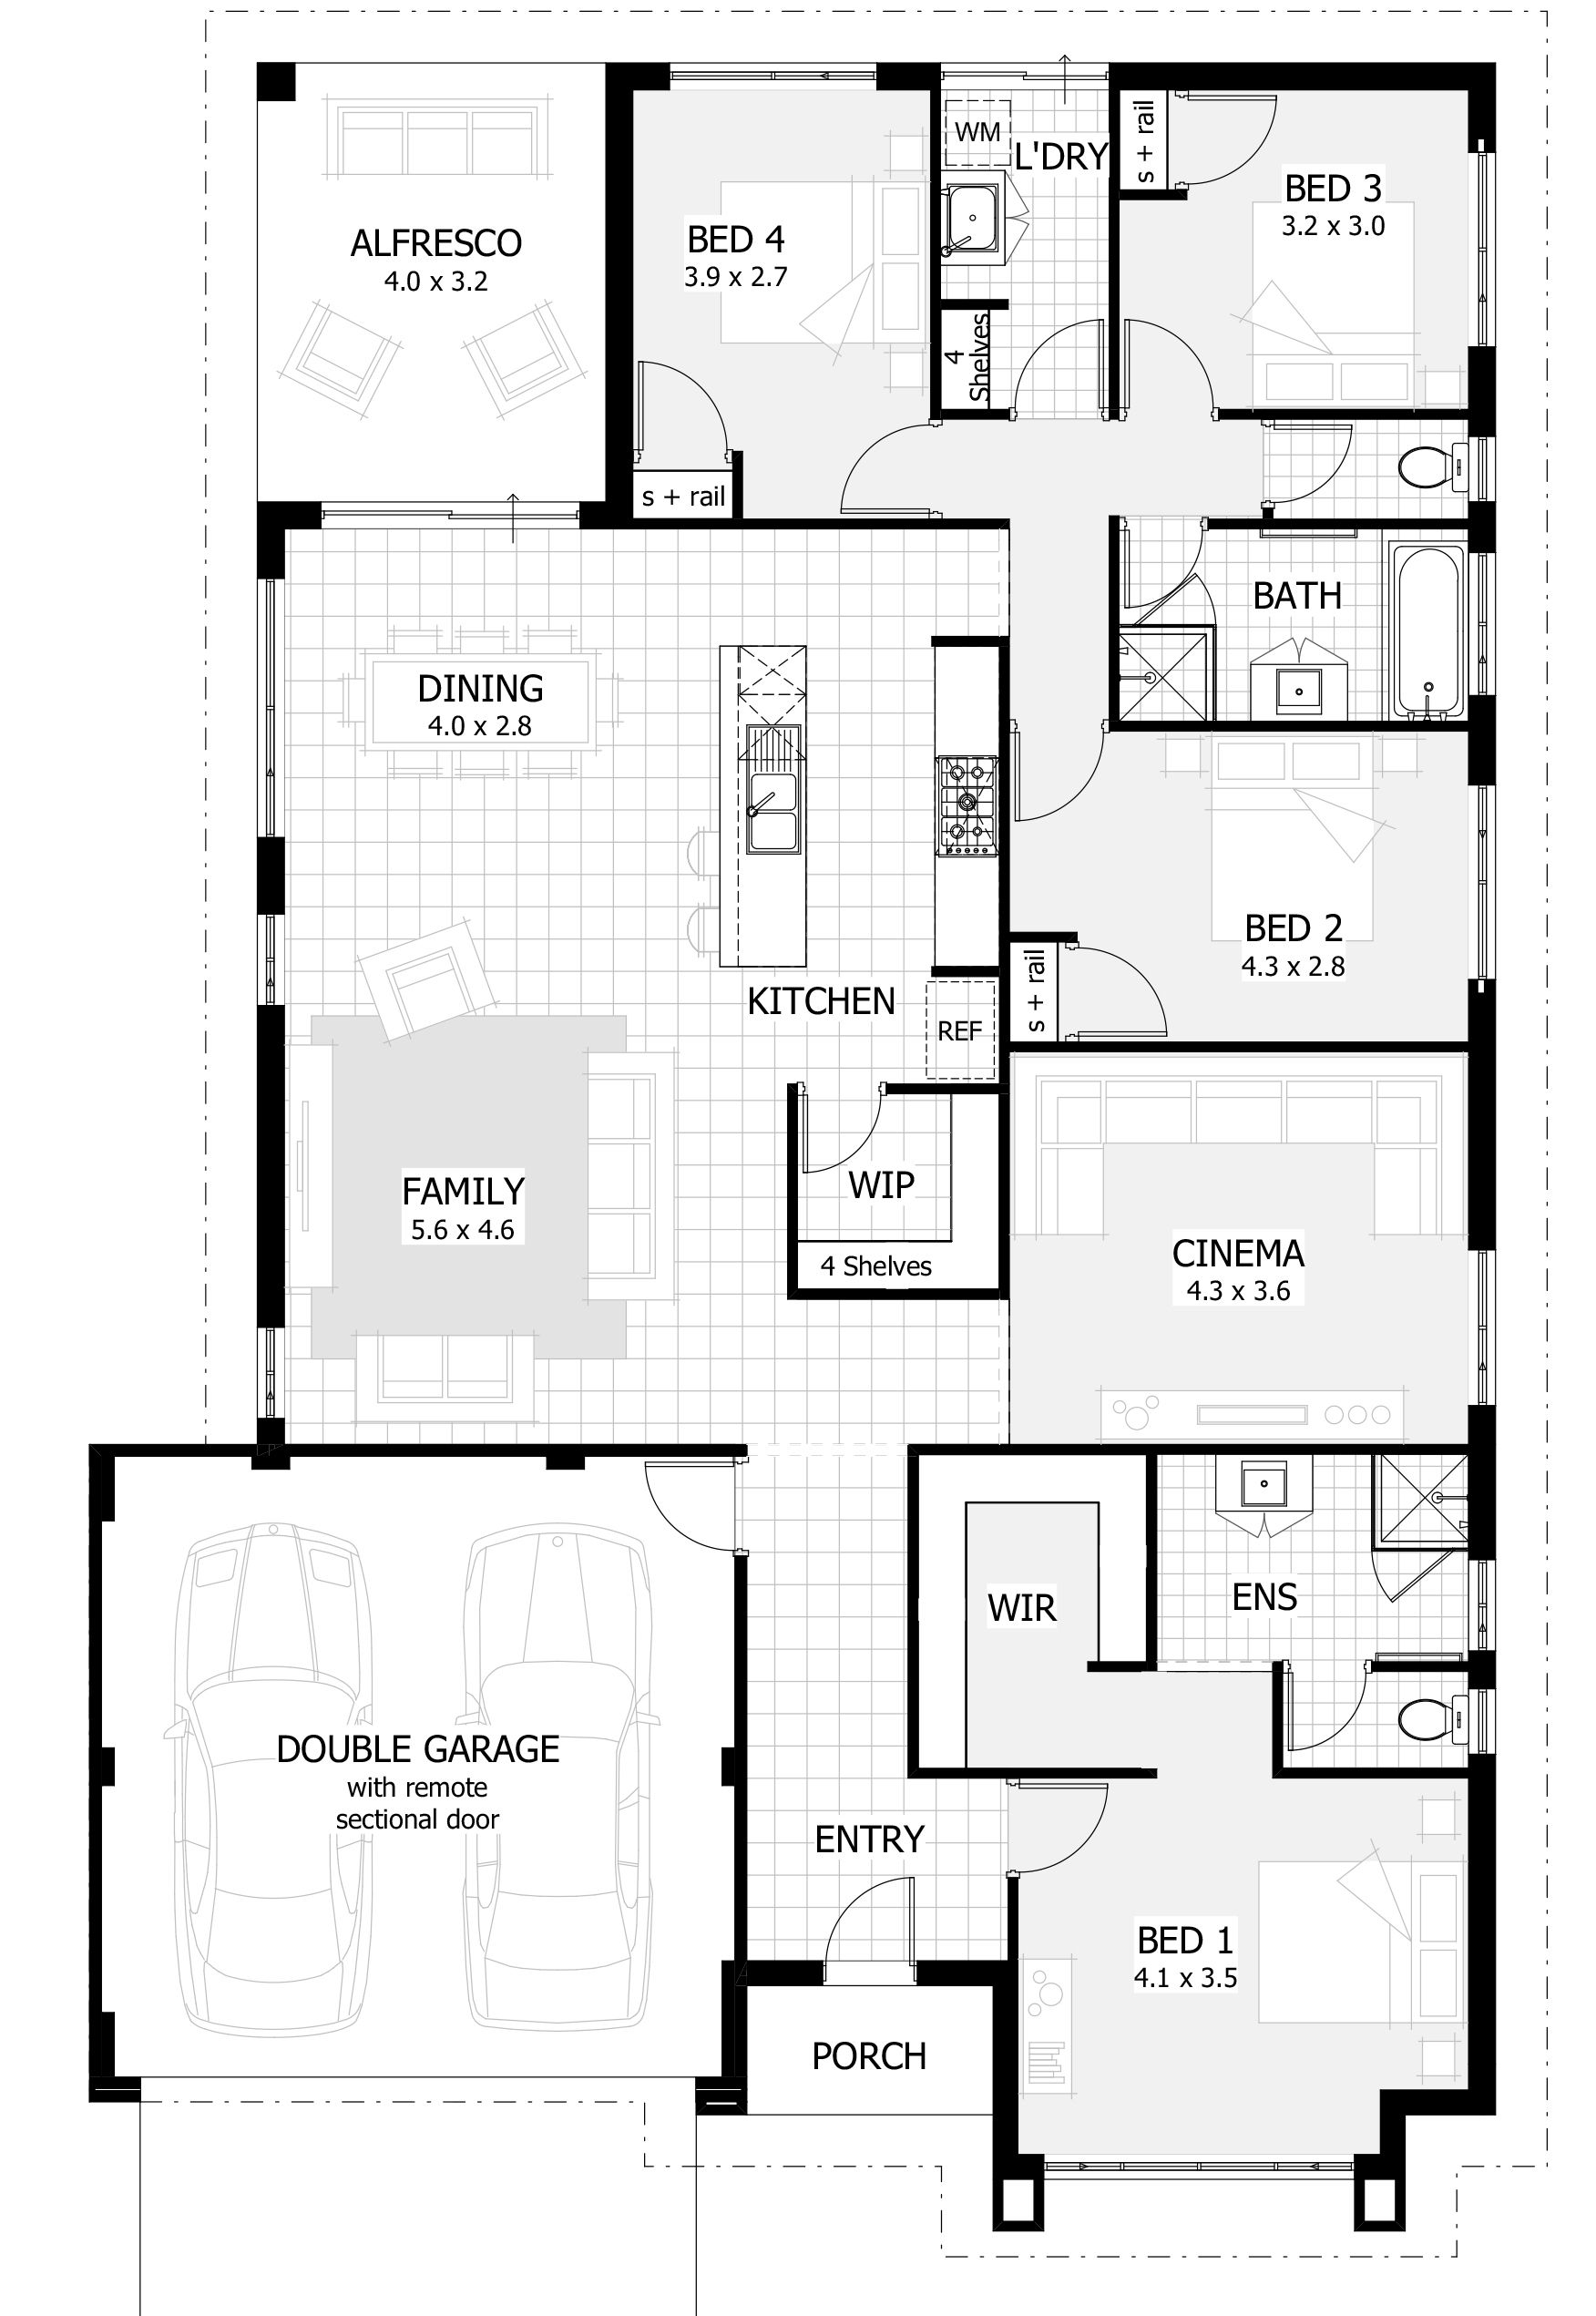 House Designs Perth New Single Storey Home Designs